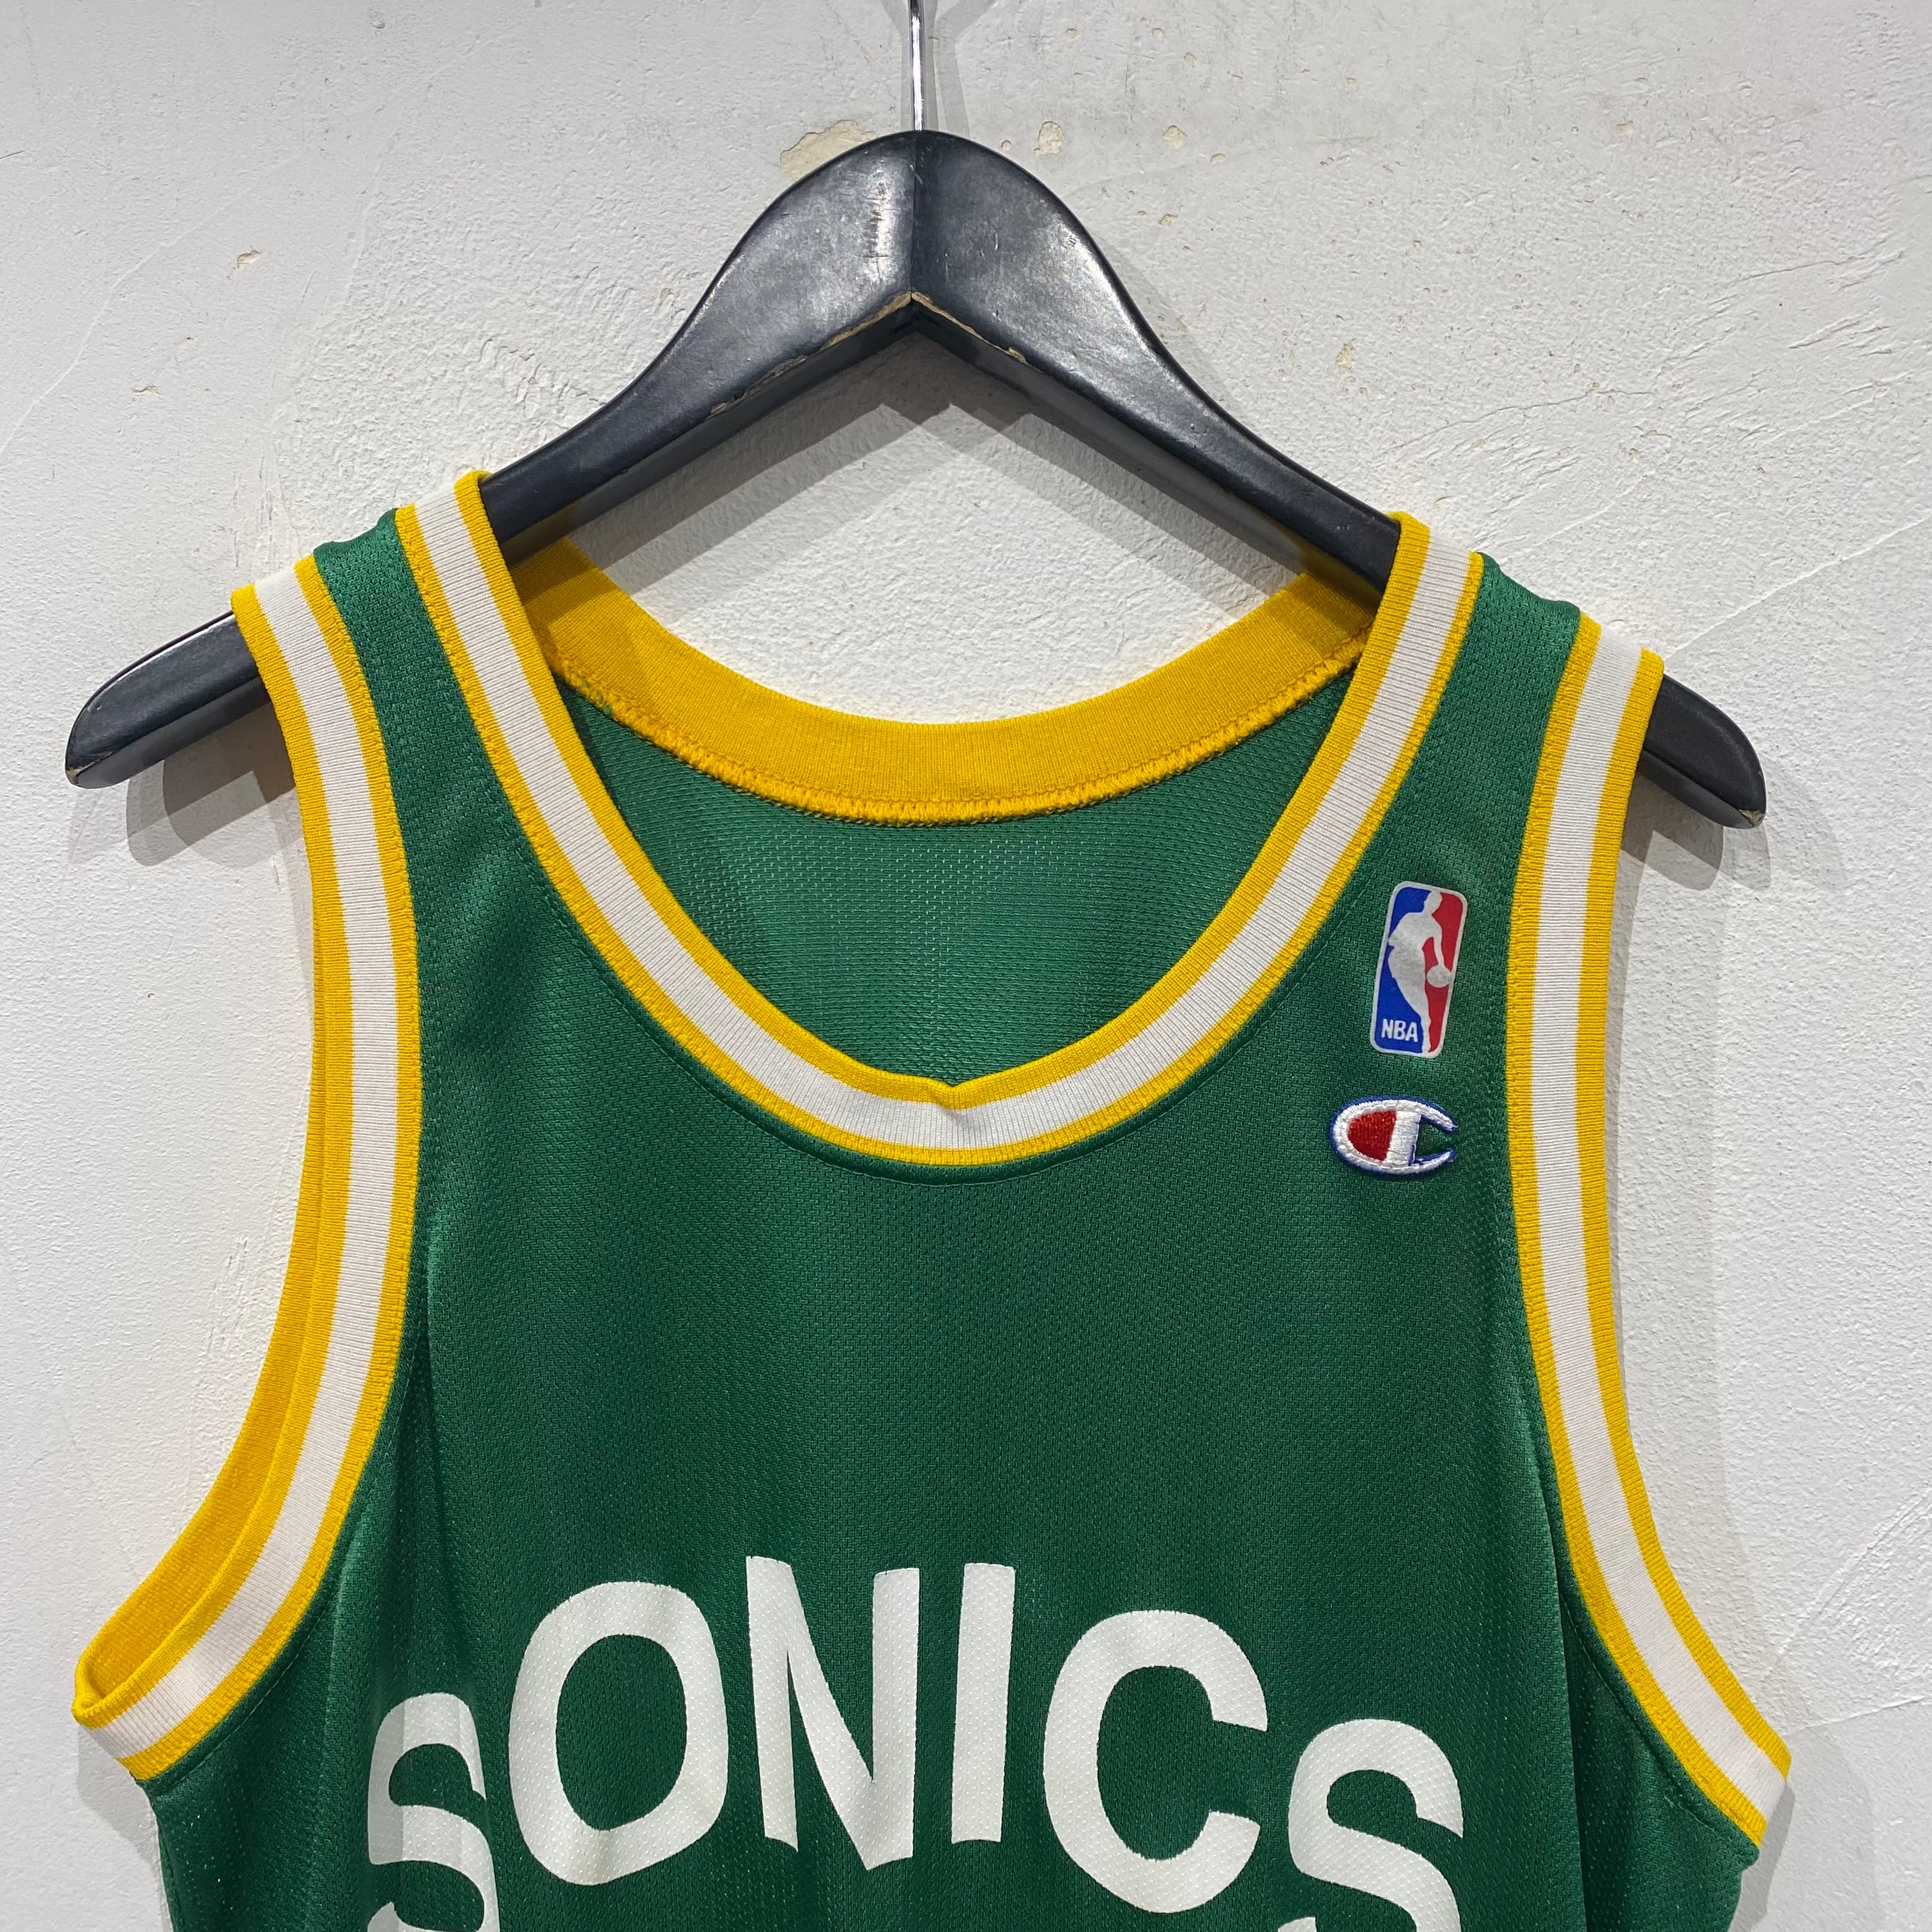 USA製 size:44【 SONICS 】ソニックス チャンピオン NBA バスケタンク ユニフォーム 緑 グリーン 古着 古着屋 高円寺 ビンテージ